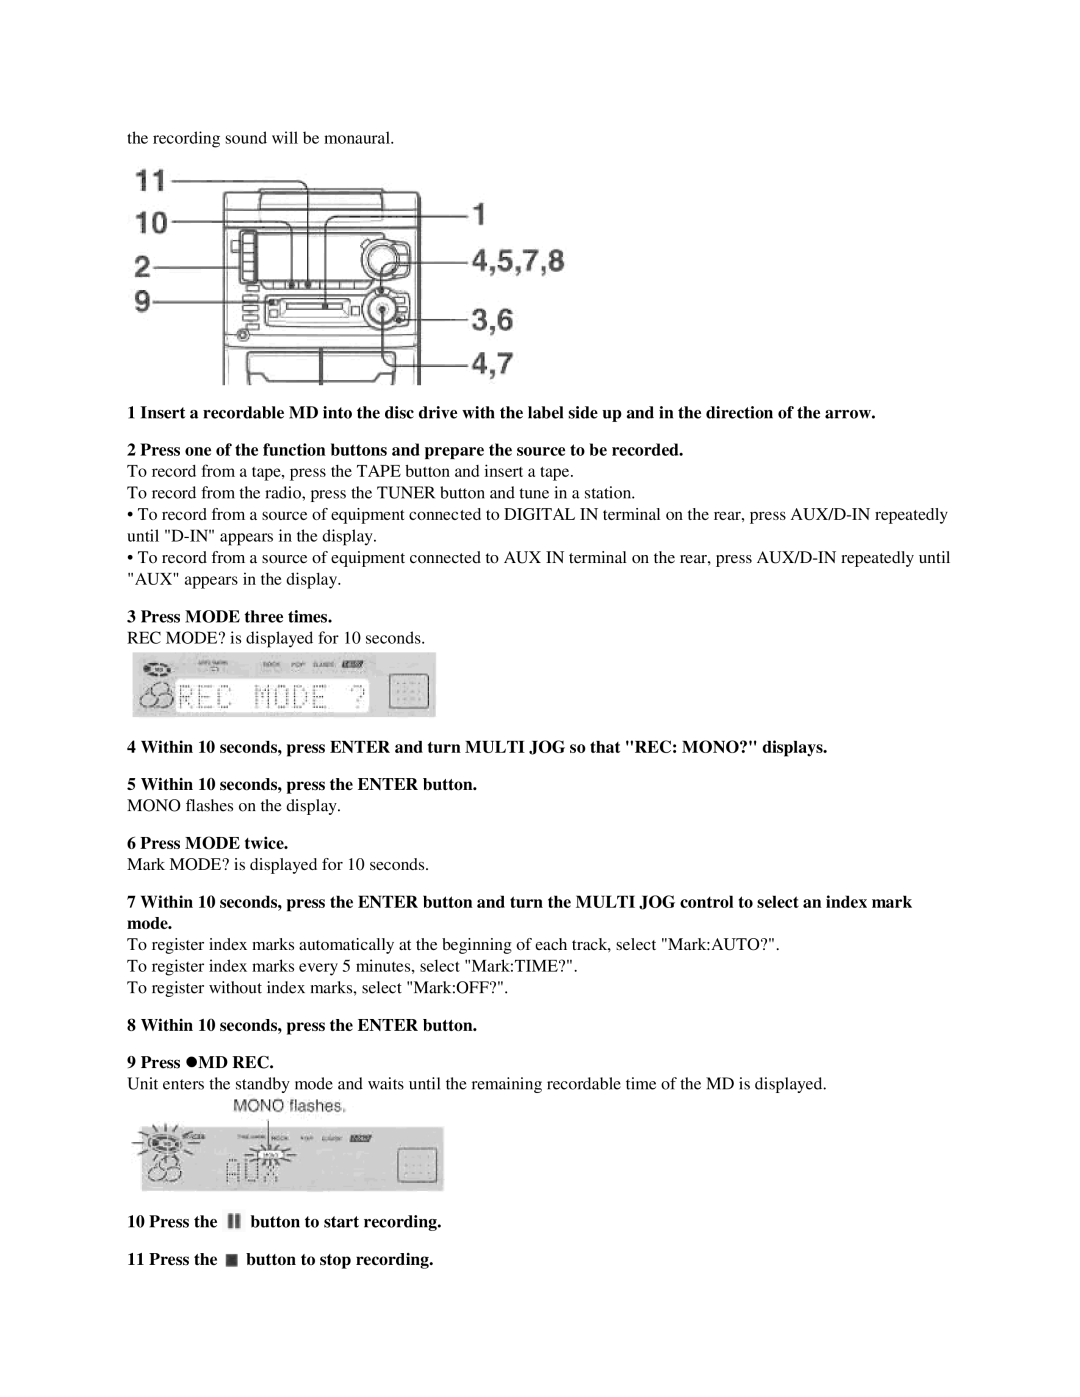 Aiwa XR-H33MD Press MODE three times, Within 10 seconds, press the ENTER button, Press MODE twice, Press zMD REC 